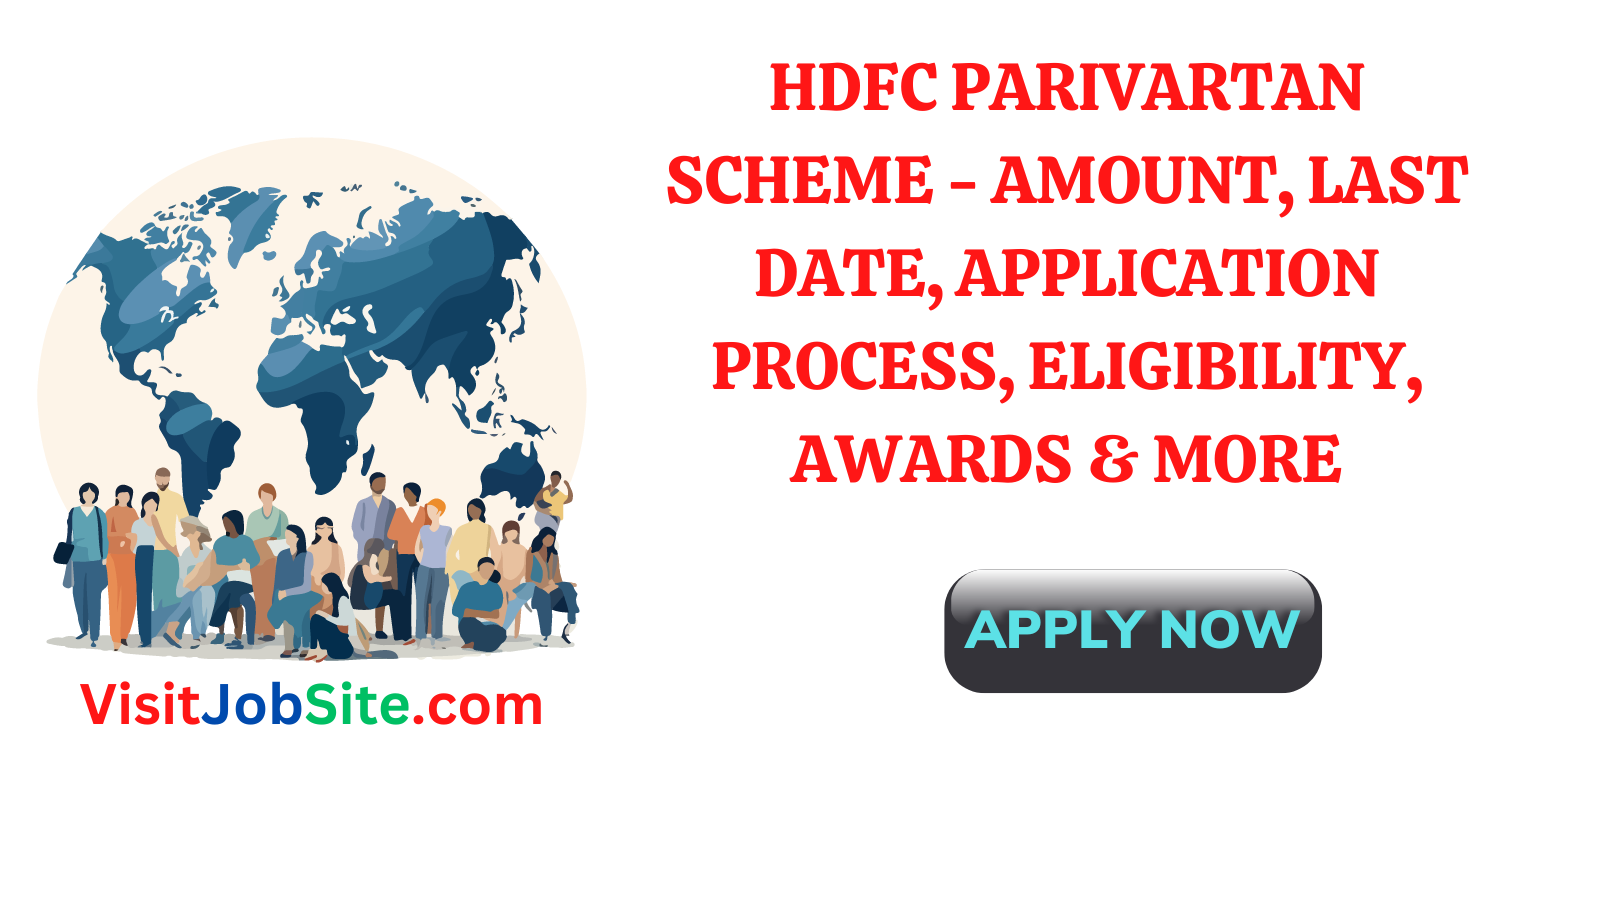 HDFC Parivartan Scheme Amount, Last Date, Application Process, Eligibility, Awards & More